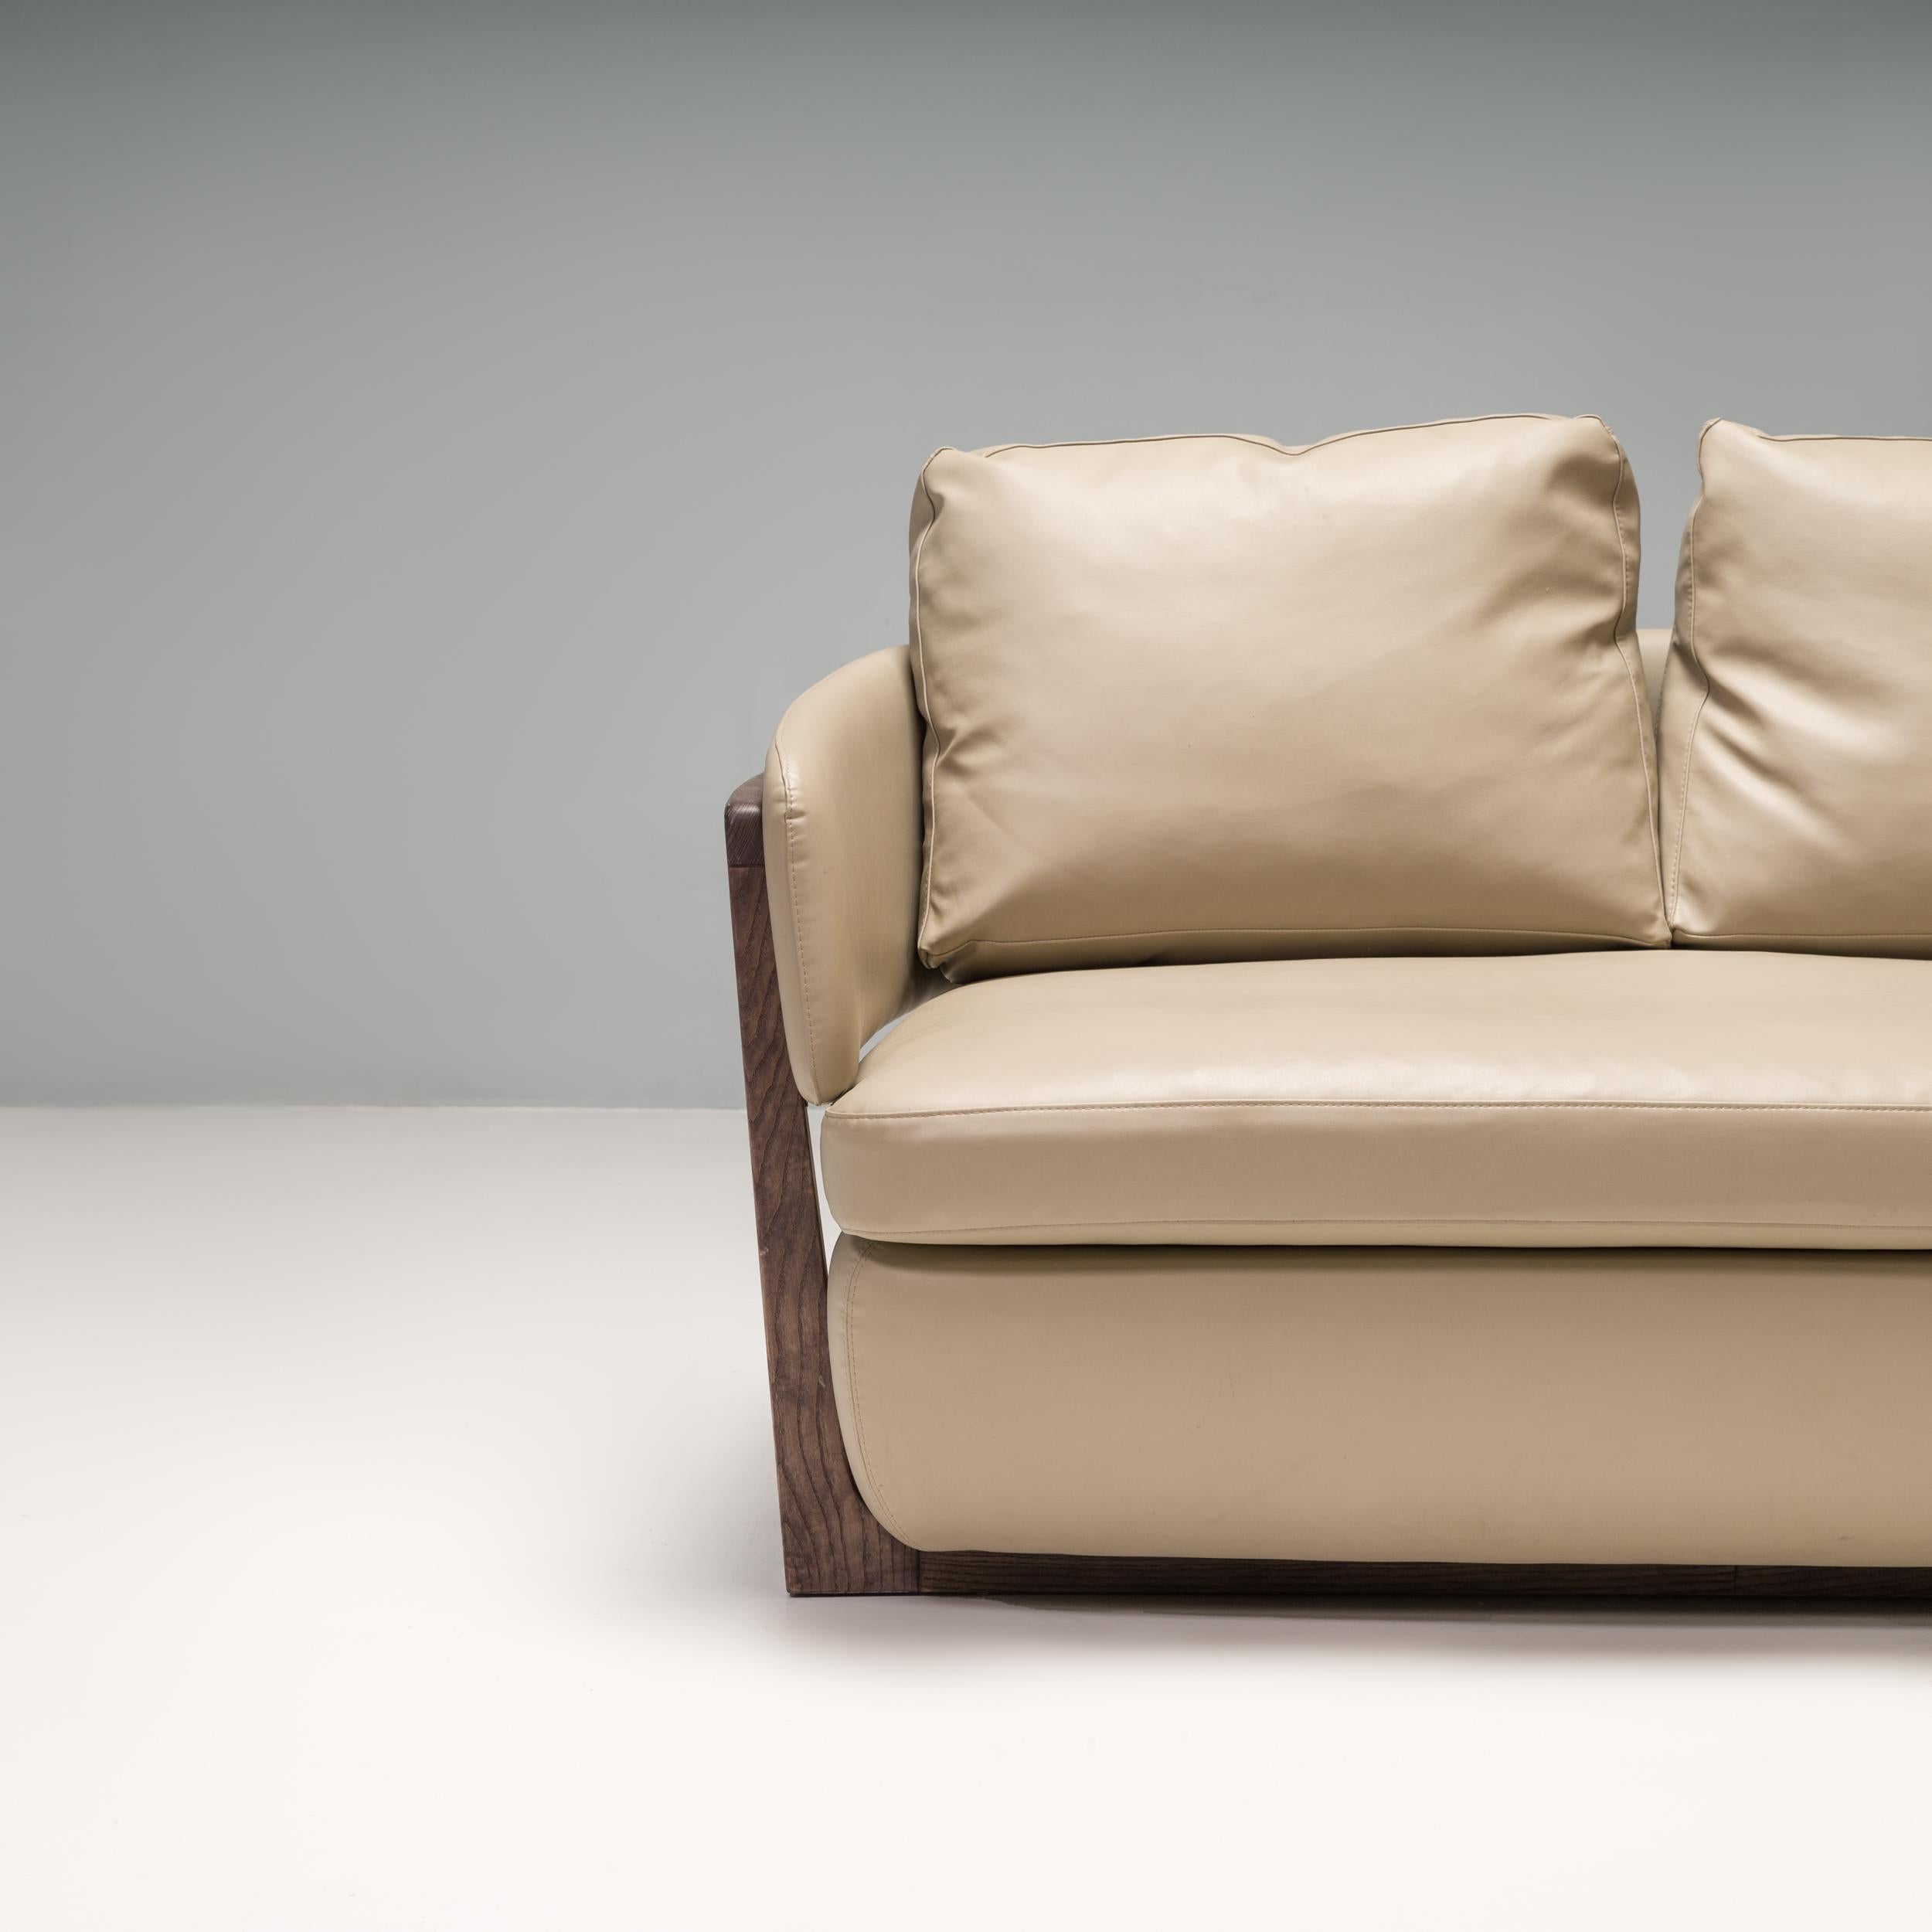 Contemporary Emmanuel Gallina for Porada Beige Leather Arena 147 Loveseat Sofa For Sale